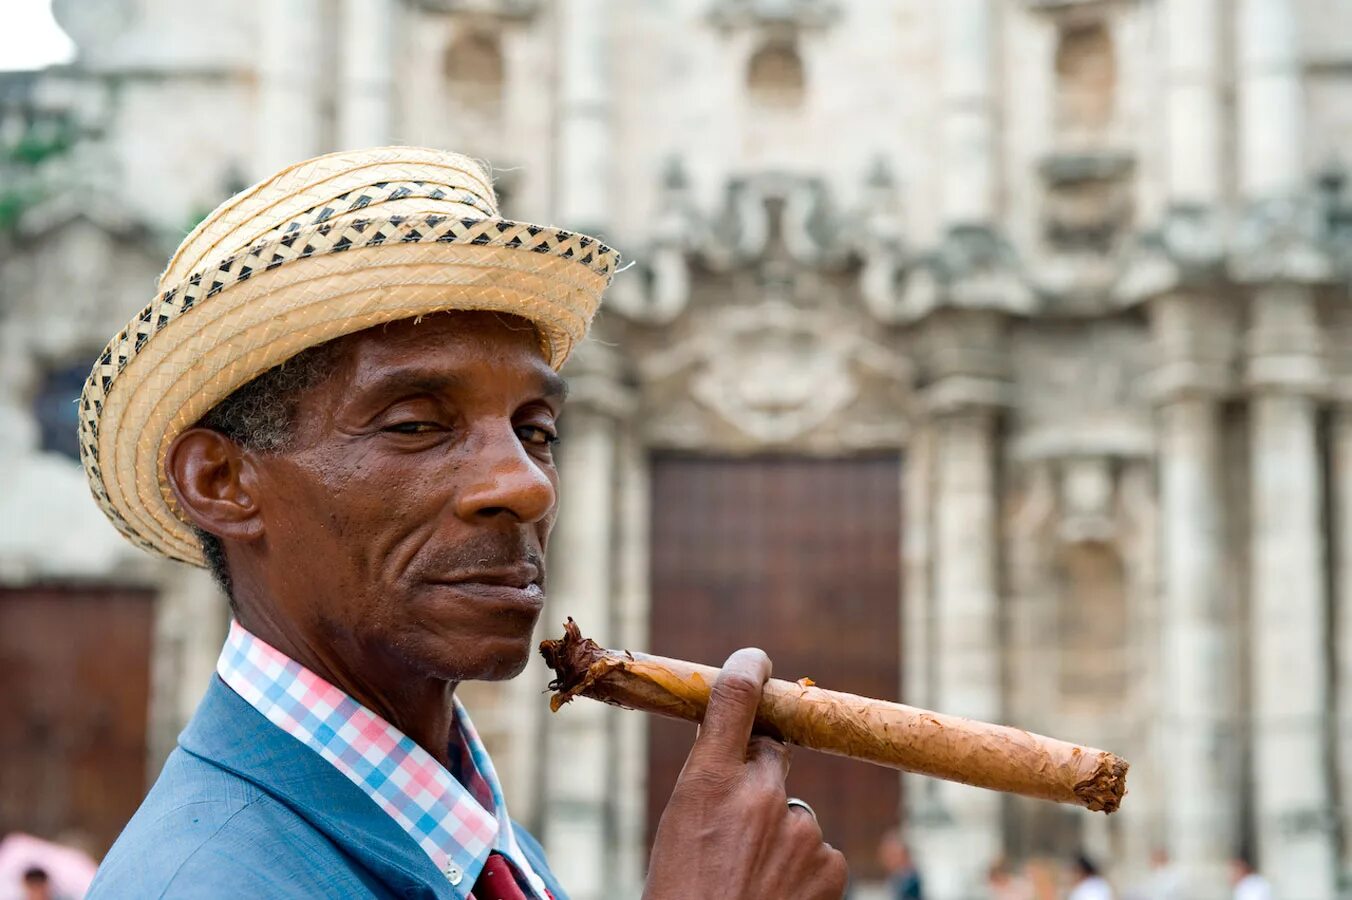 Кубинский мужской. Куба Гавана Ром сигары кубинцы. Кубинские сигары Гавана. Кубинская сигара Cohiba Habana Cuba. Кубинский табакеро Луис.